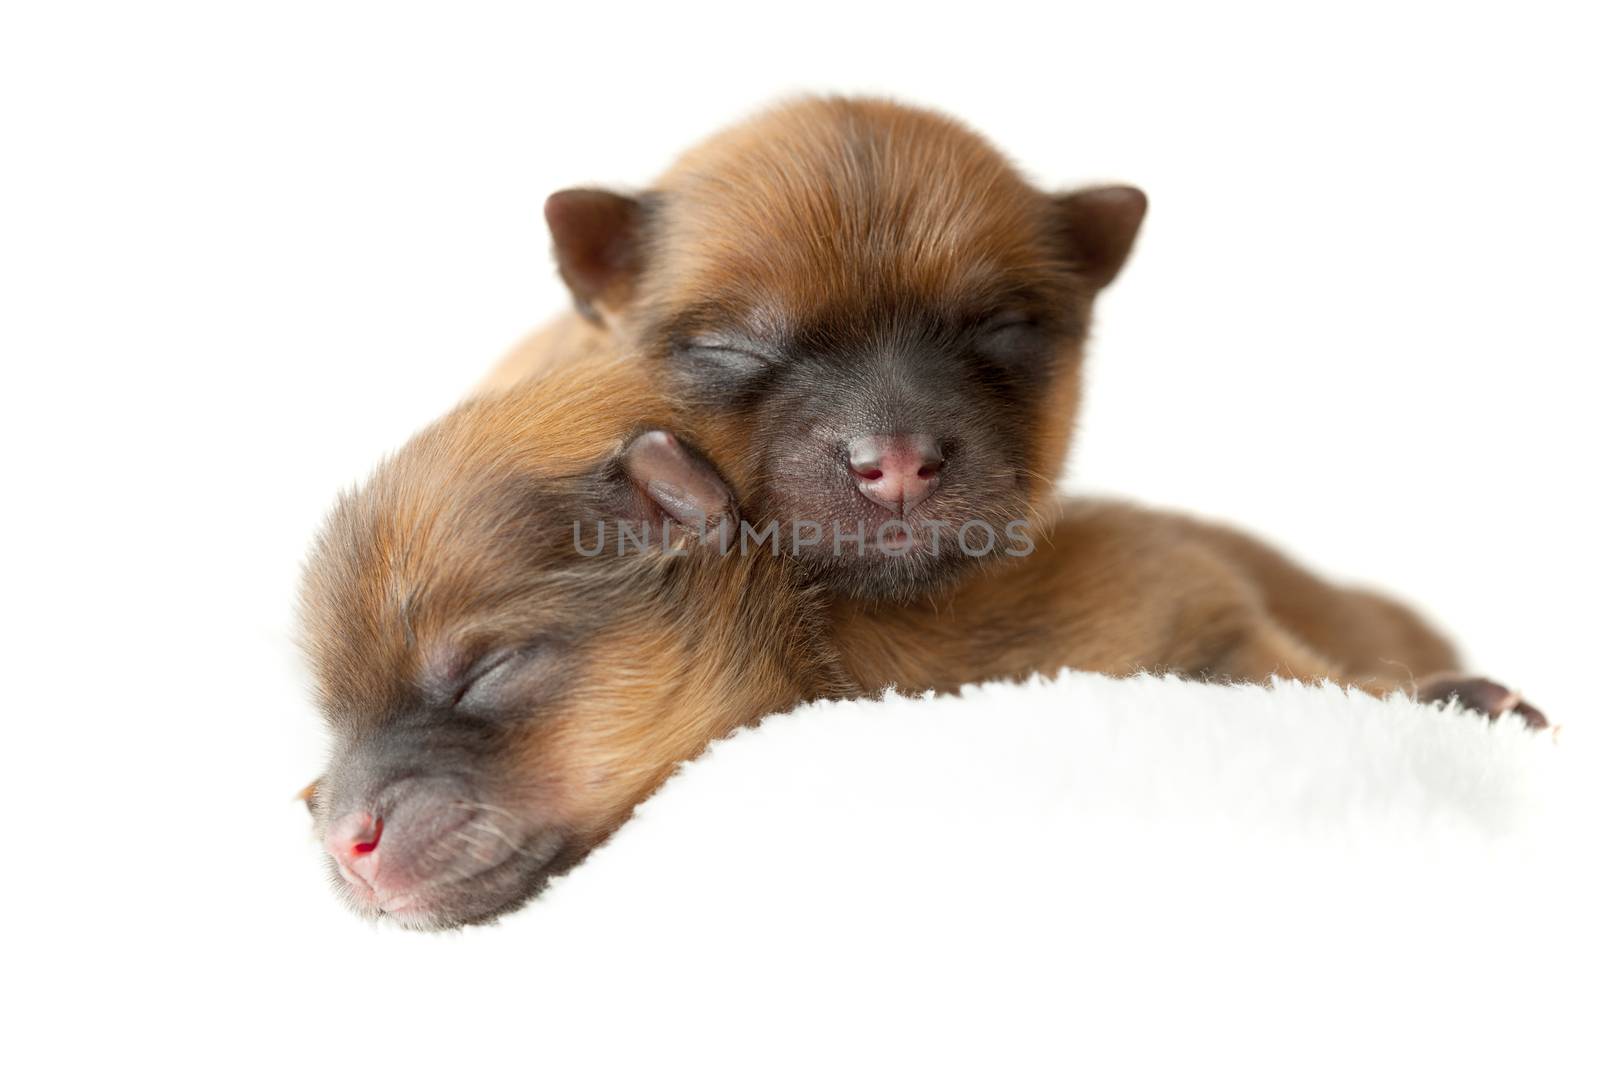 Pomeranian puppies, couple of days old by kokimk